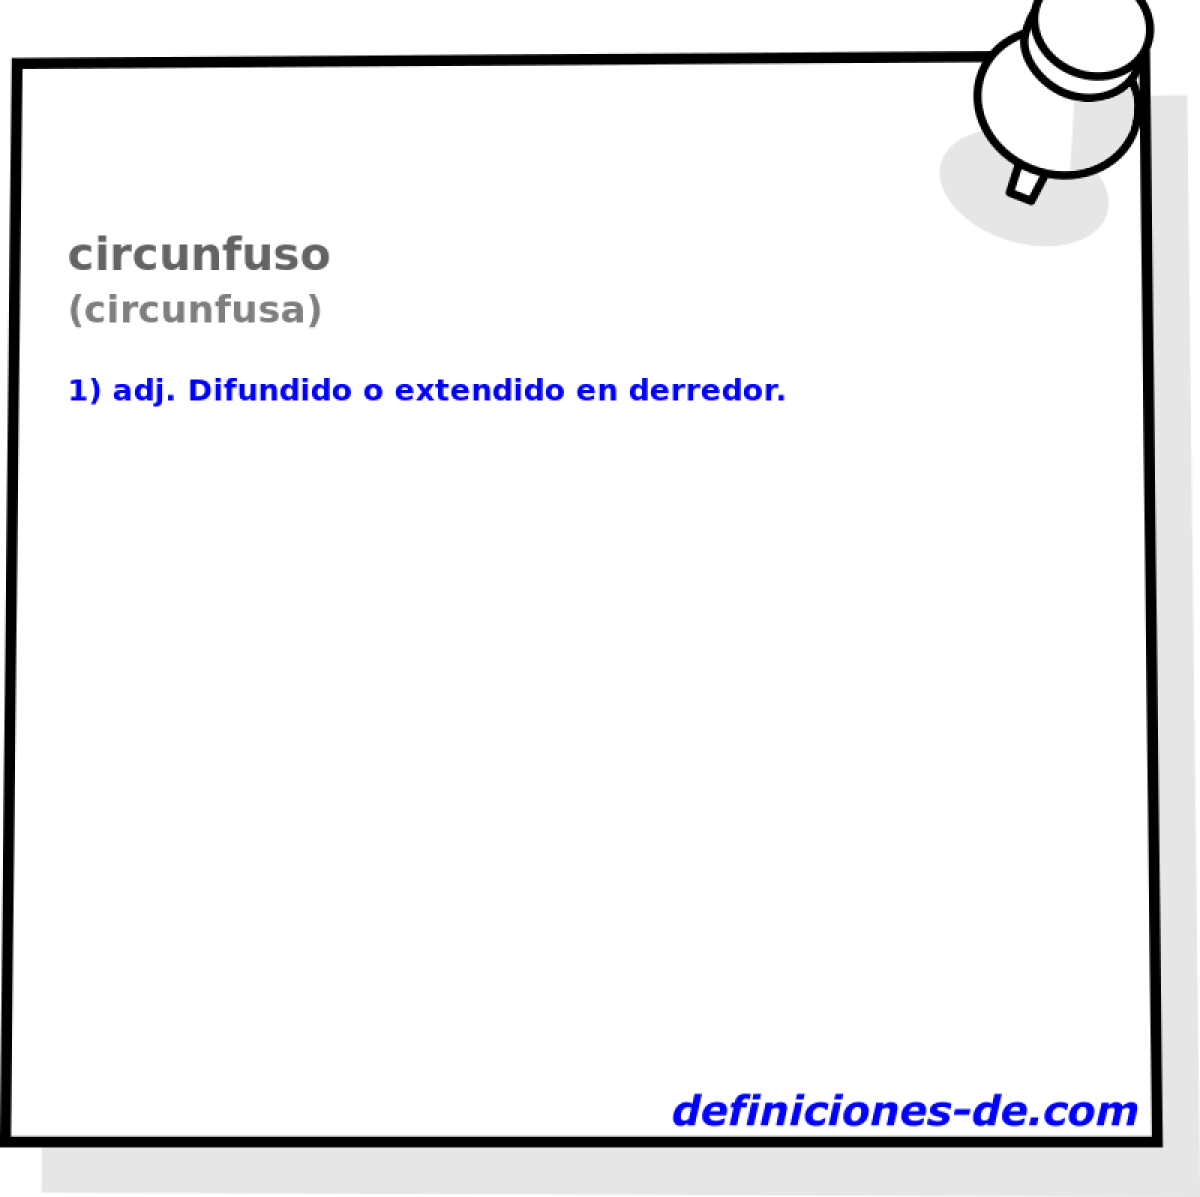 circunfuso (circunfusa)